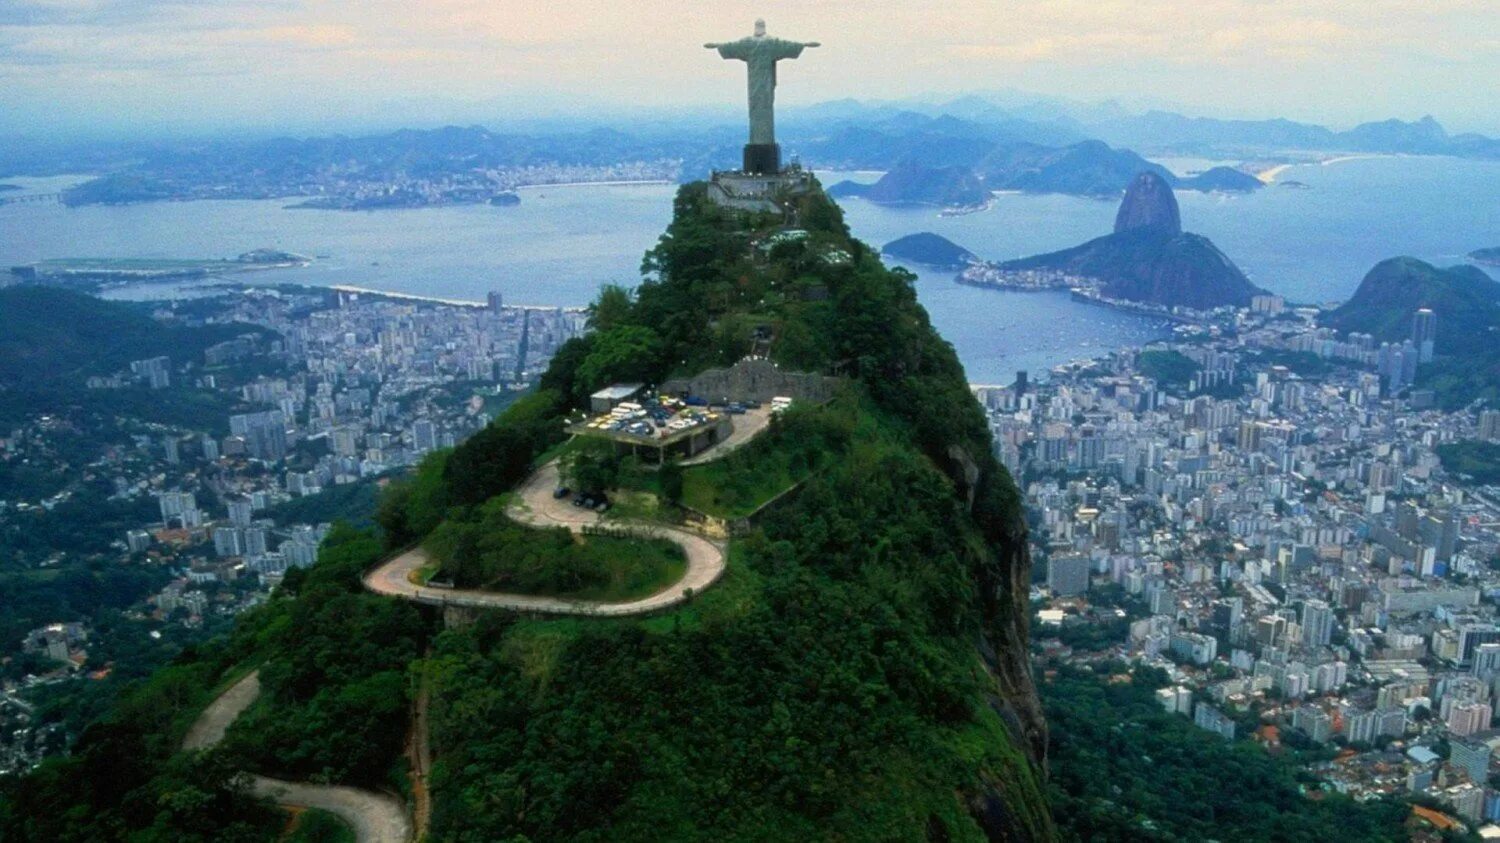 Country brazil. Статуя Христа-Искупителя Рио-де-Жанейро. Гора Корковадо Рио-де-Жанейро Бразилия. Гора Корковадо статуя Христа. Бразилия Рио де Жанейро статуя.